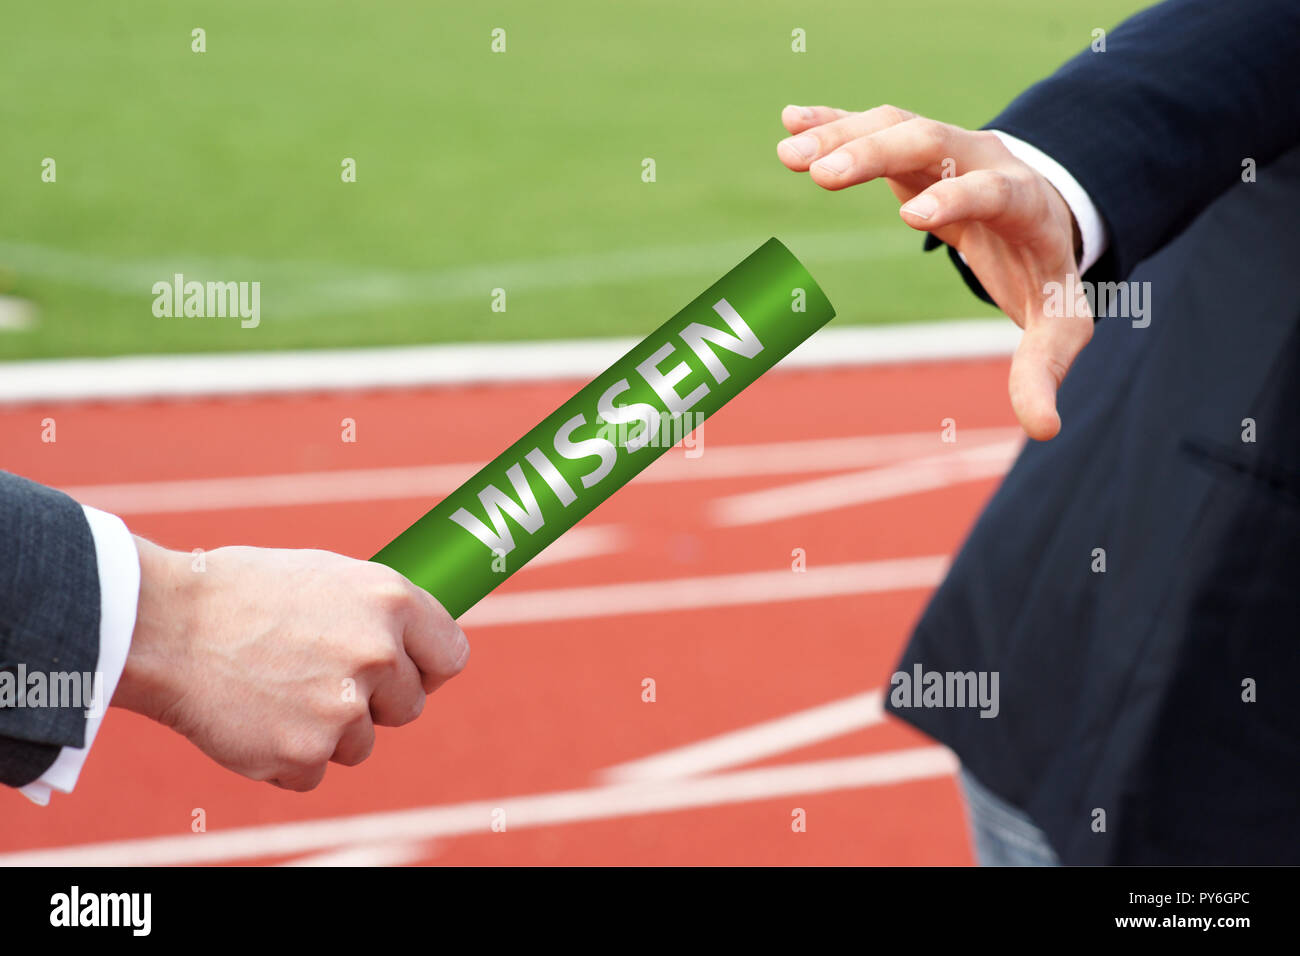 Businessmen passing baton with german word - Wissen Stock Photo